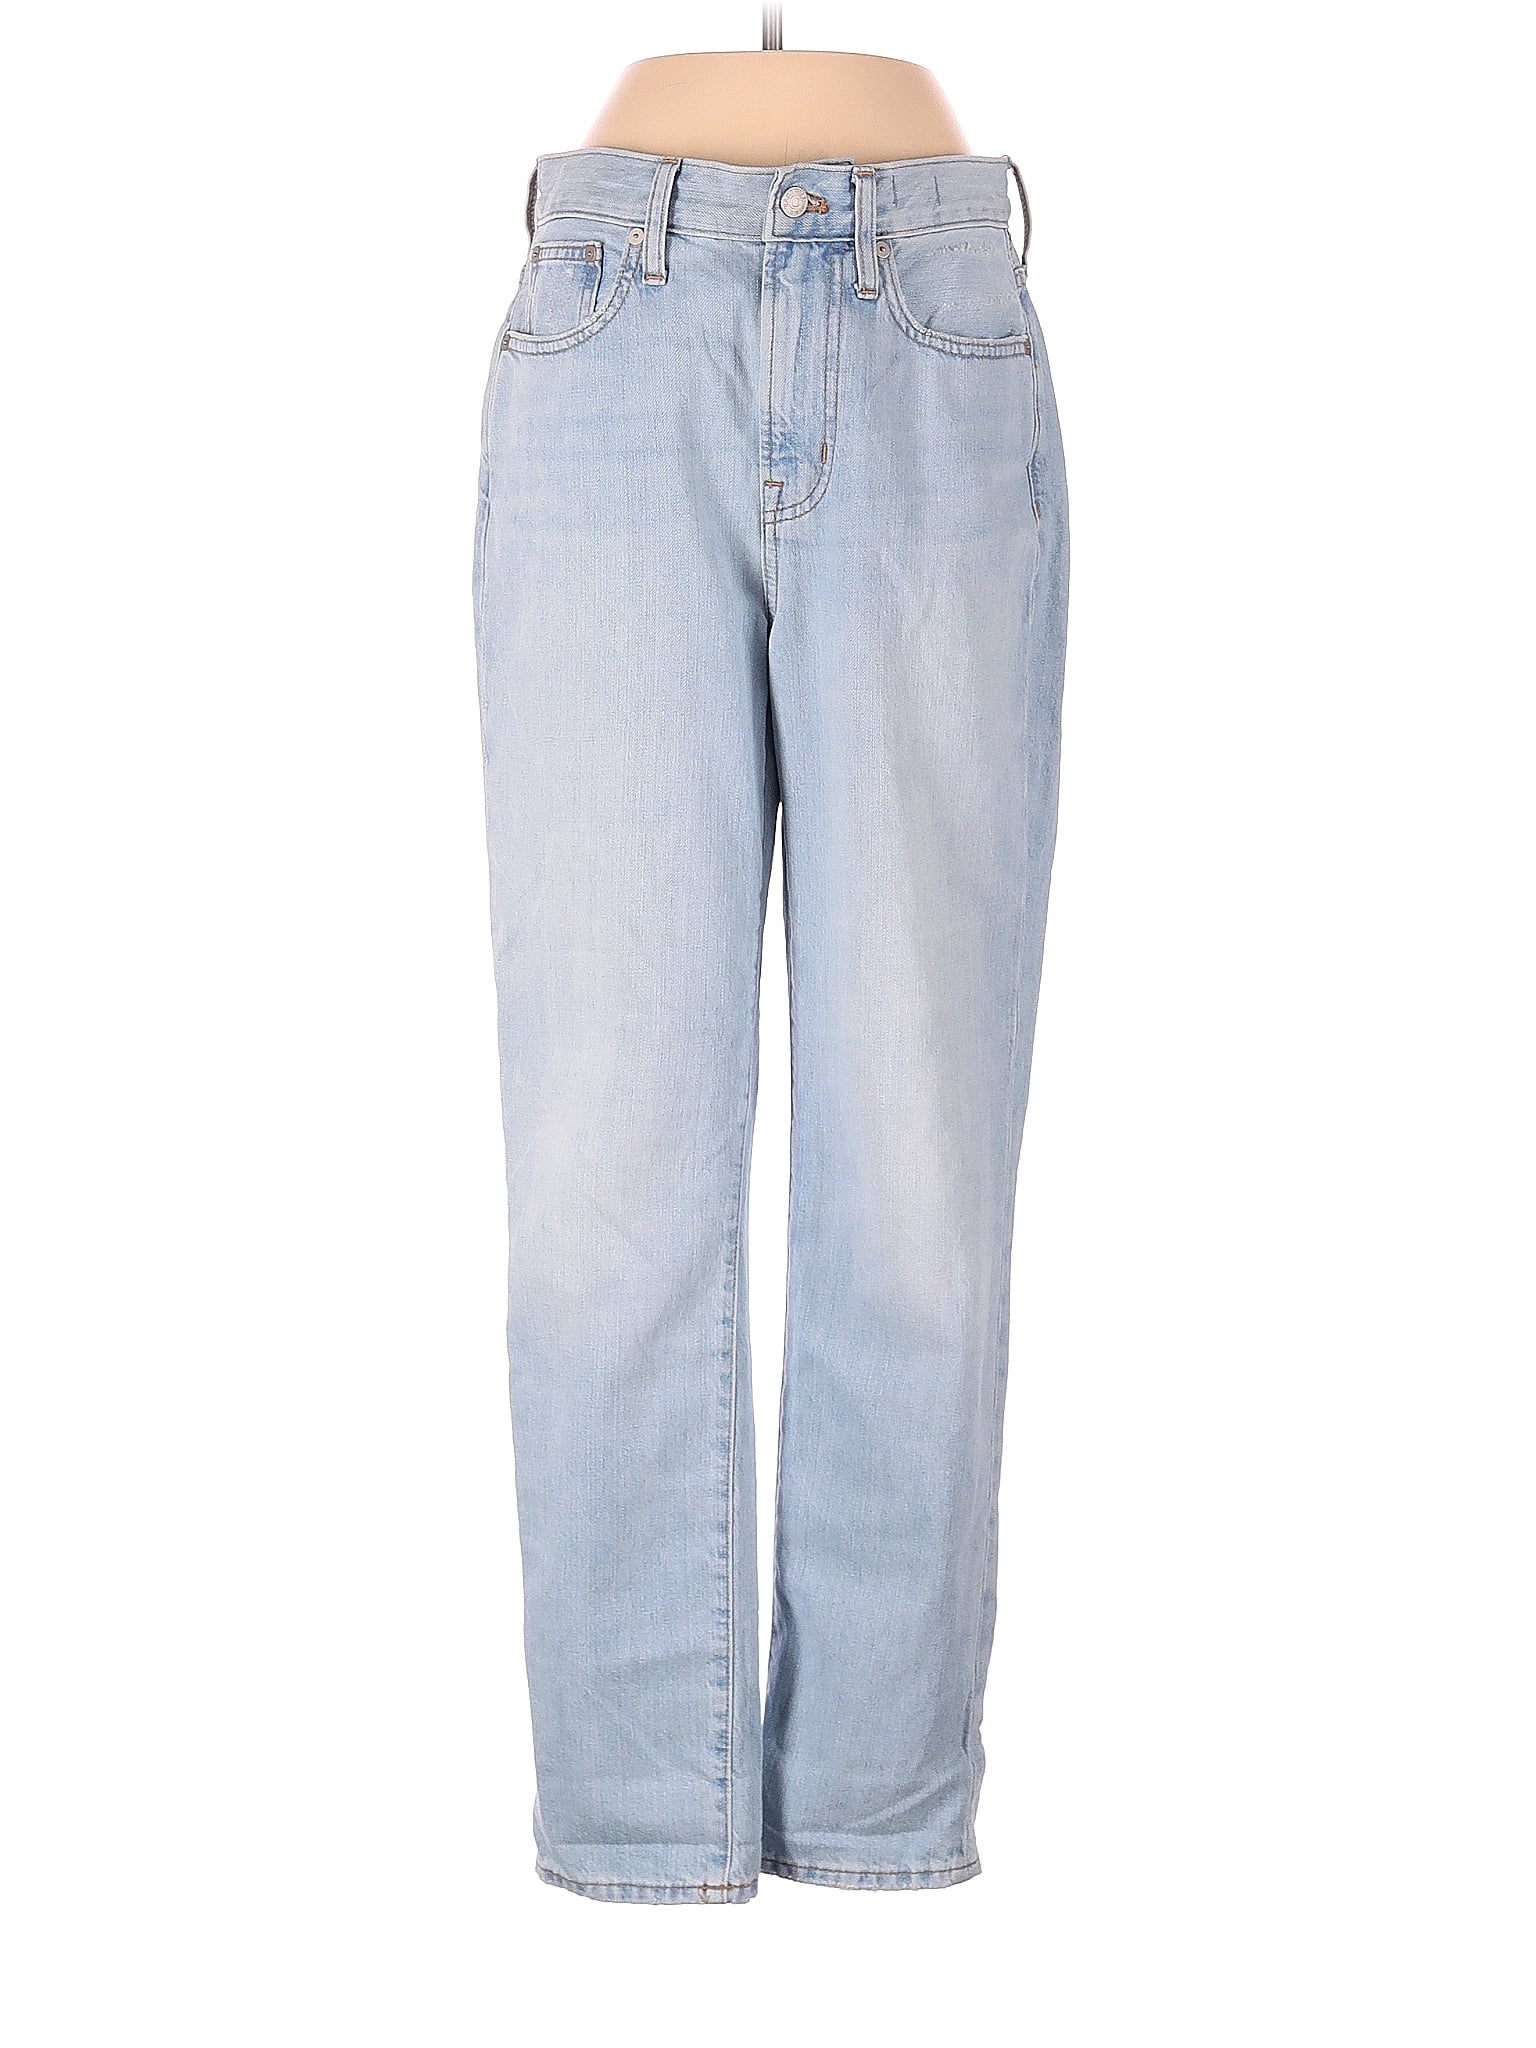 Mid-Rise Boyjeans Jeans in Light Wash waist size - 25